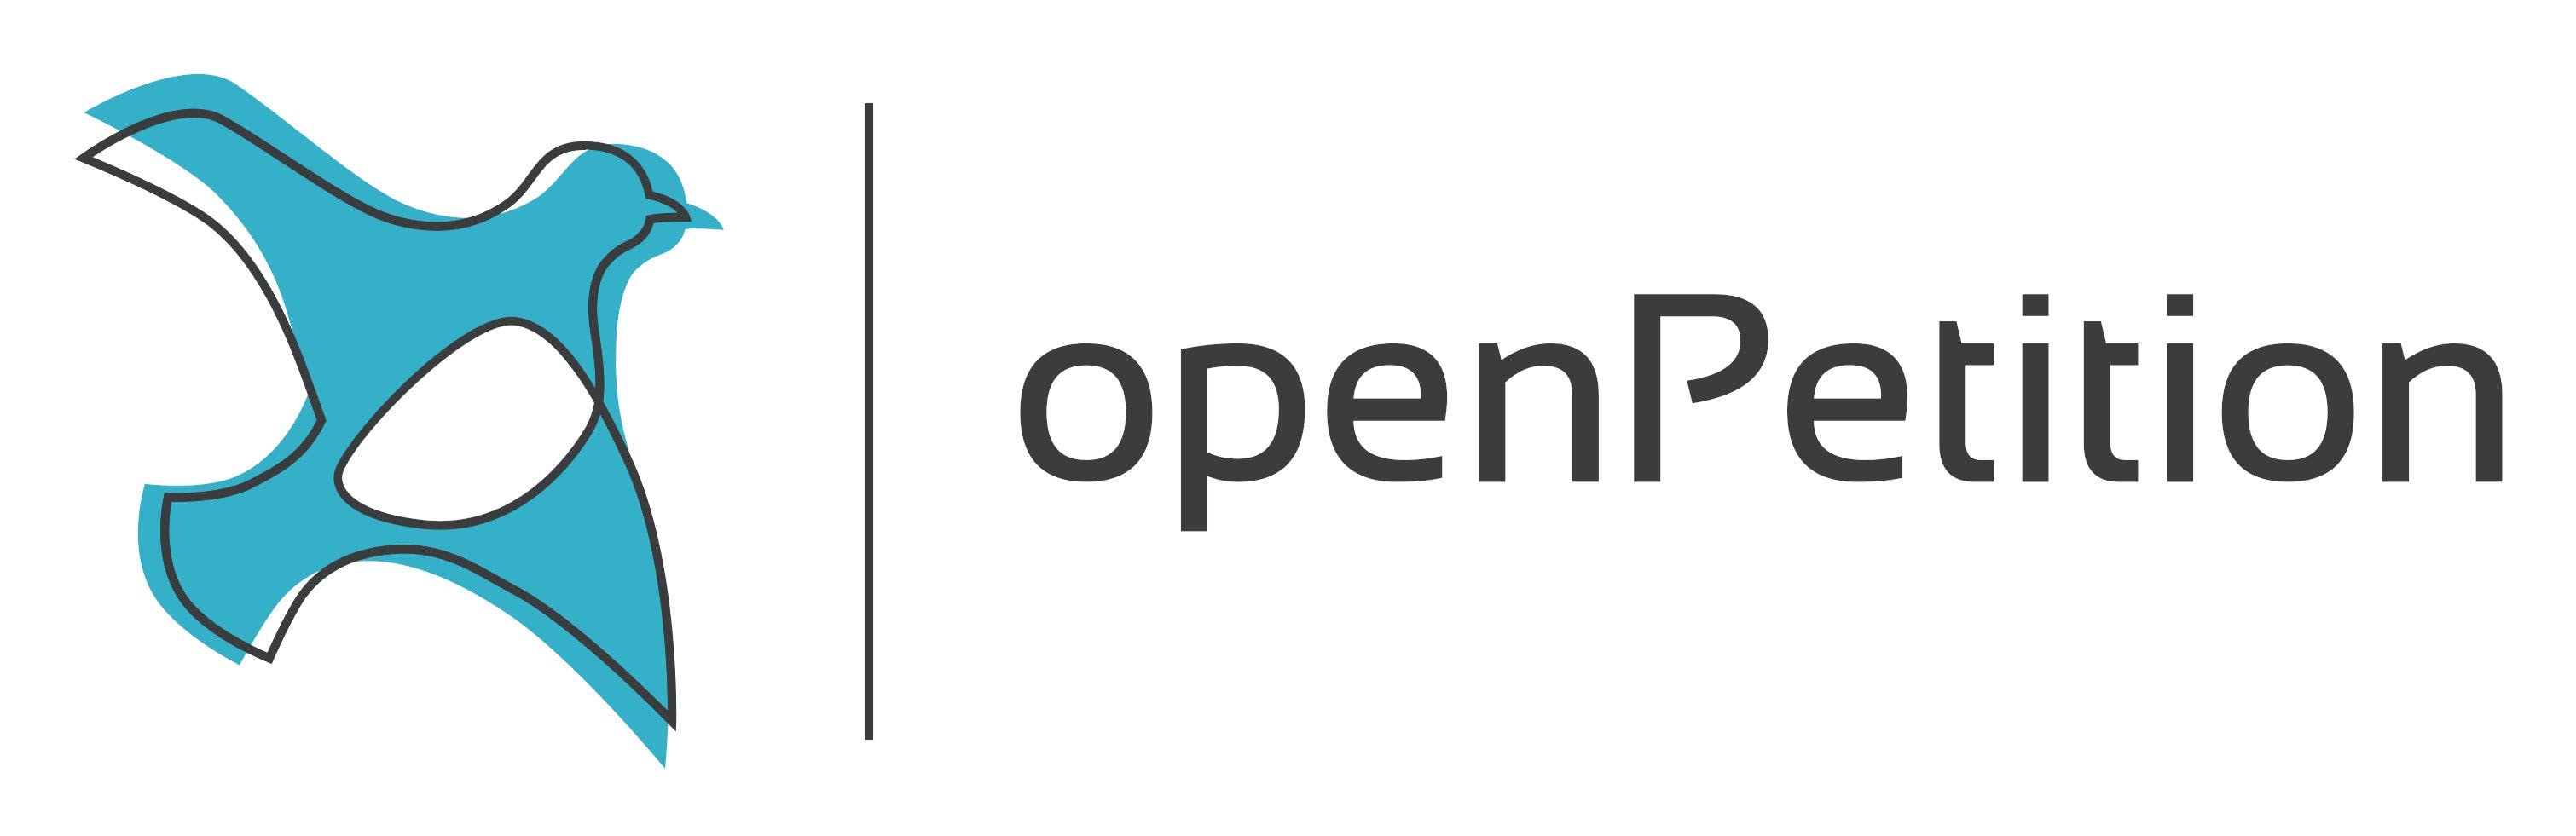 openPetition logo